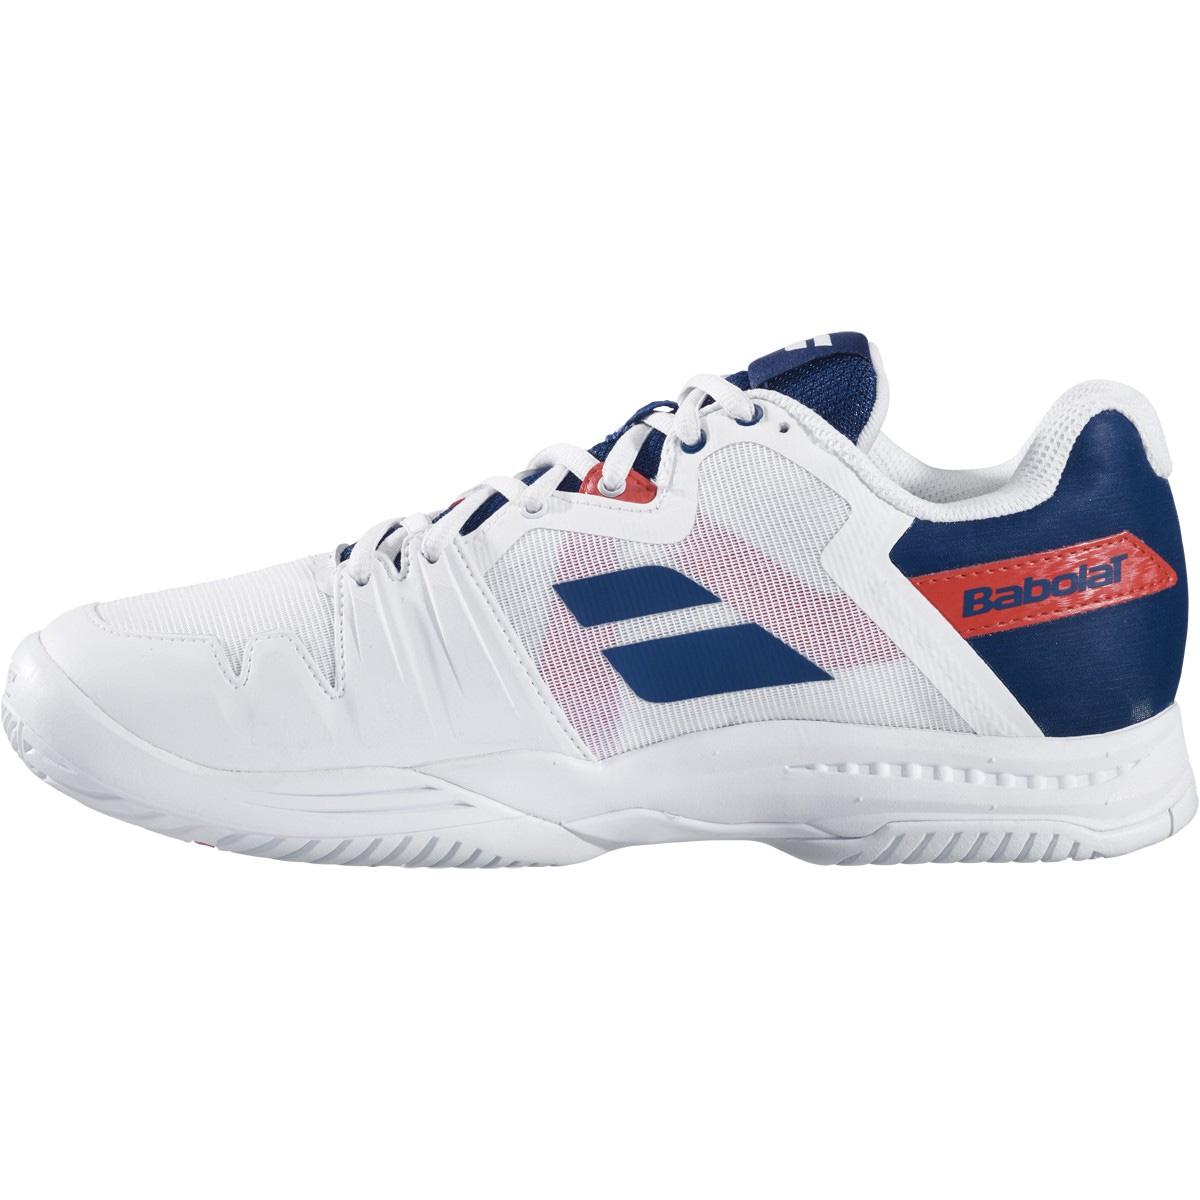 Babolat Mens SFX3 Tennis Shoes - White/Estate Blue - Tennisnuts.com